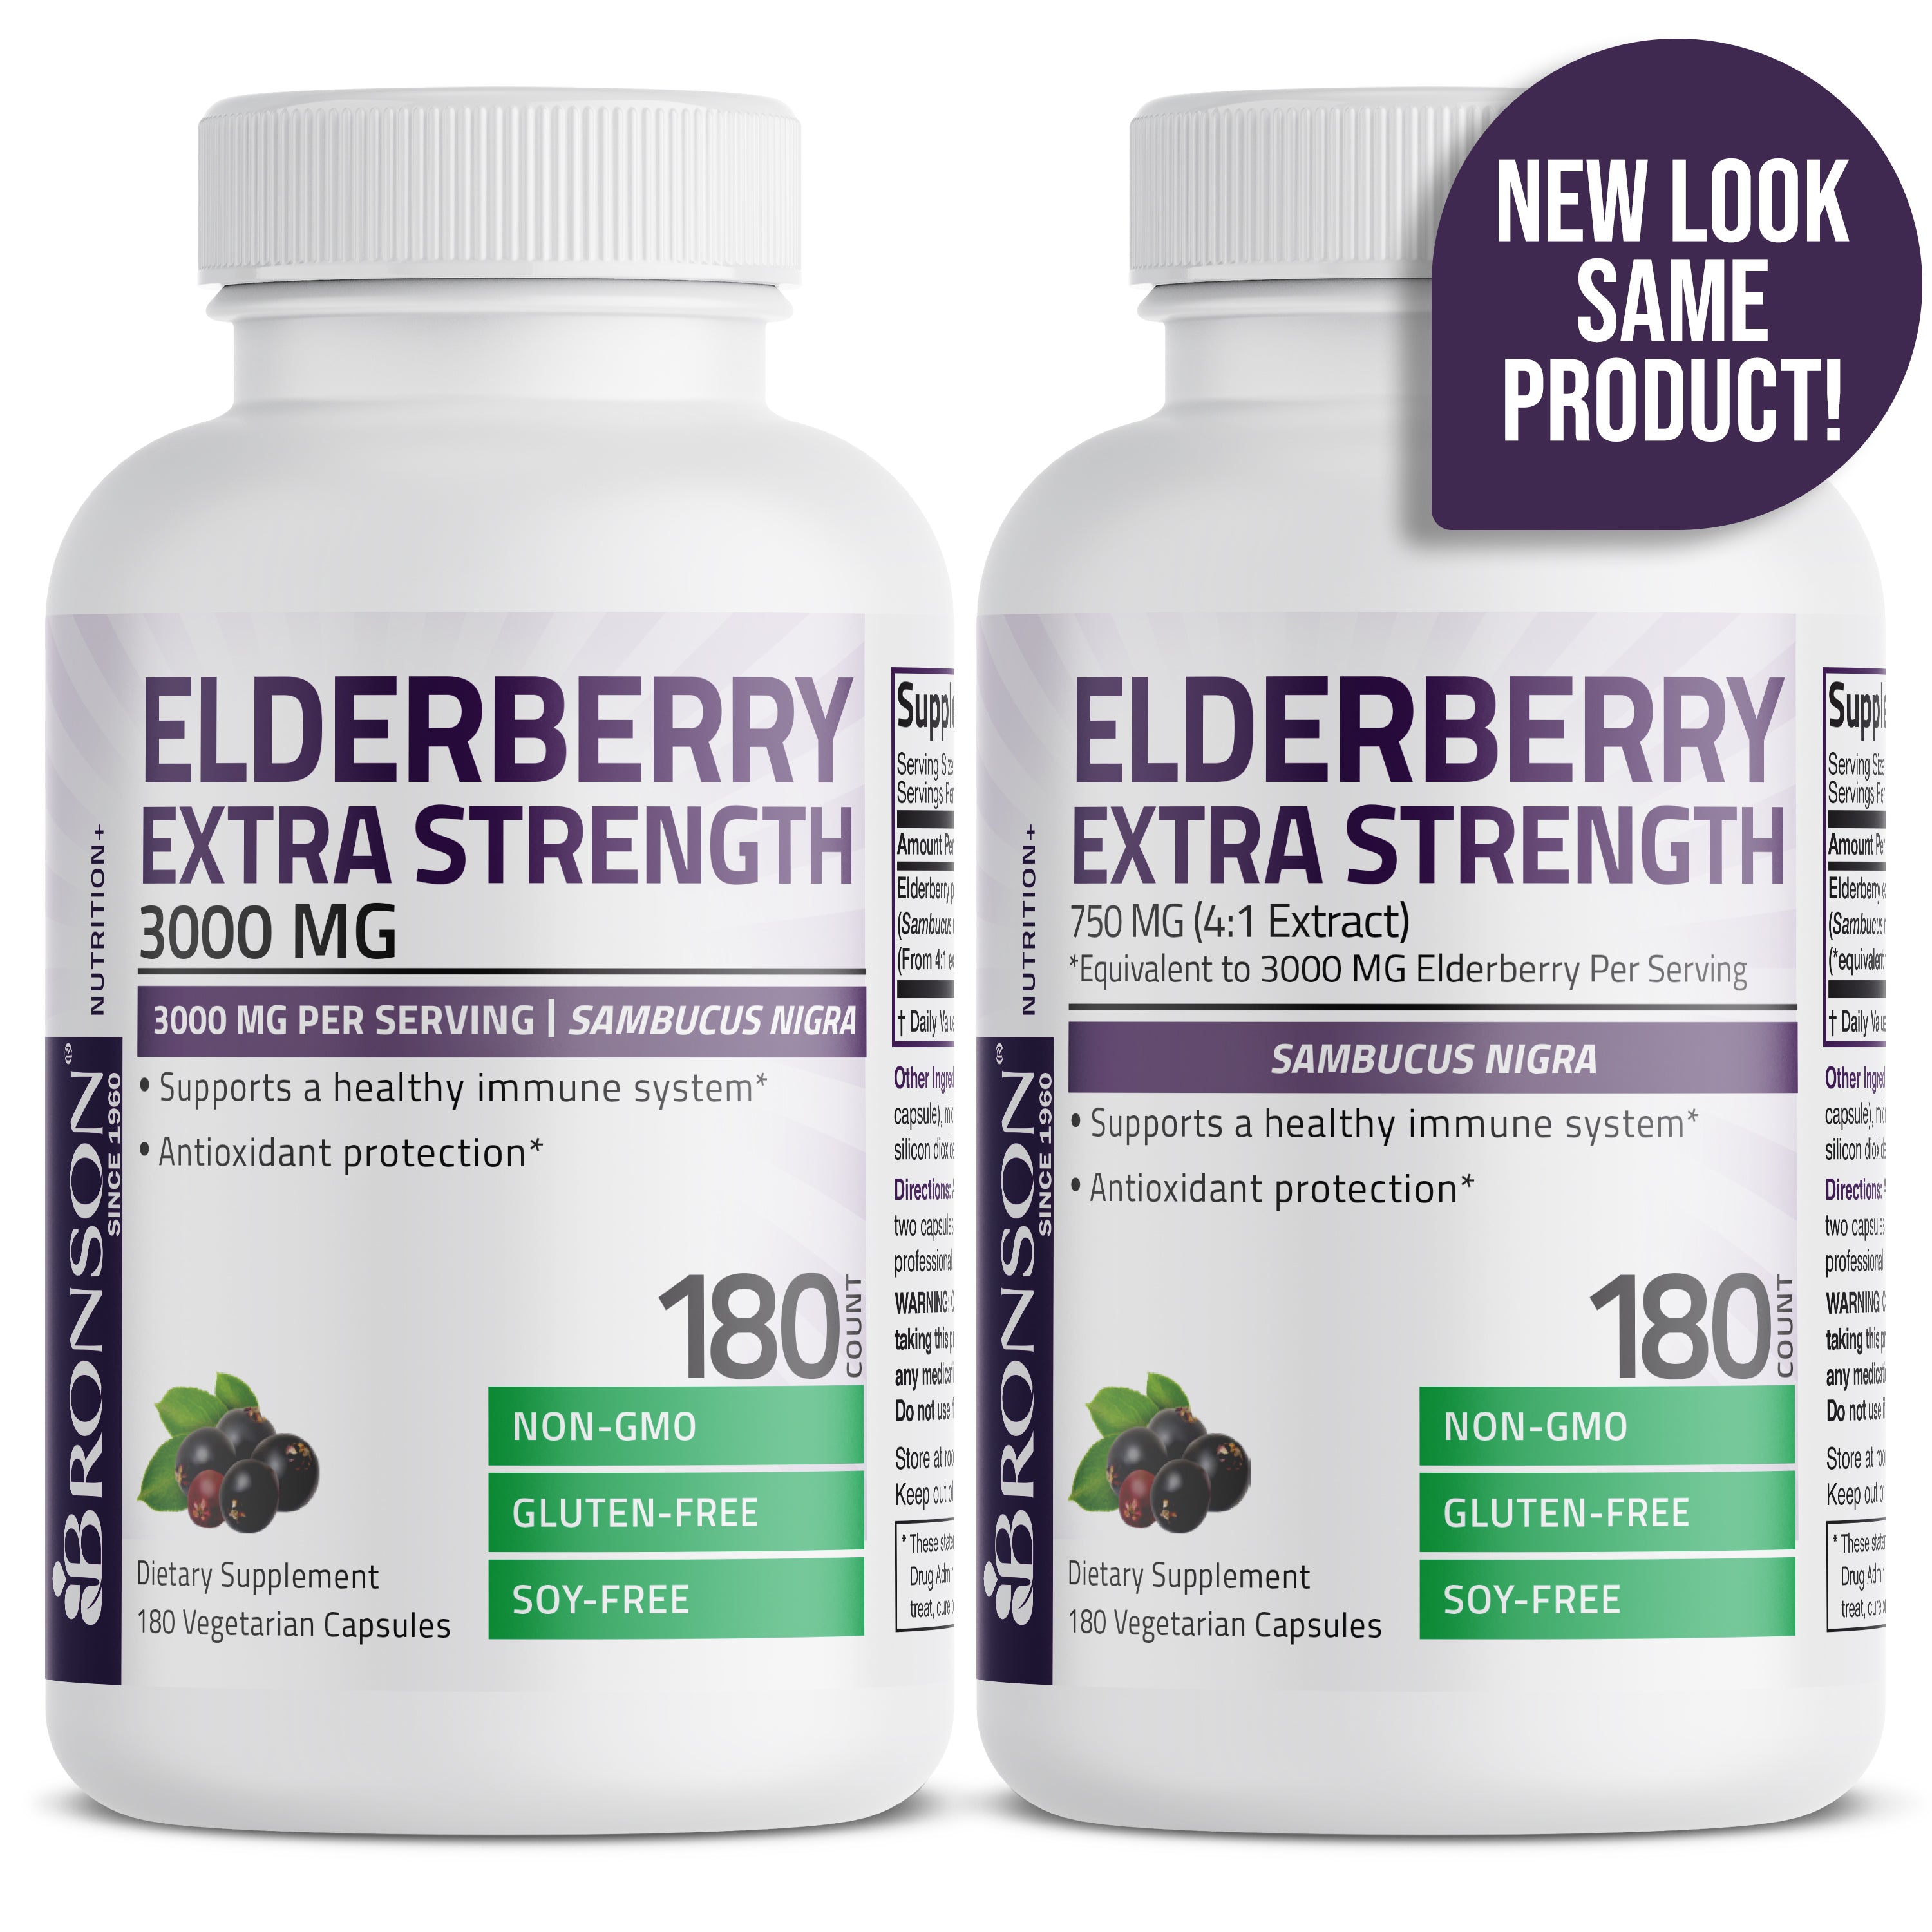 Elderberry Extra Strength - 3,000 mg - 180 Vegetarian Capsules view 4 of 7